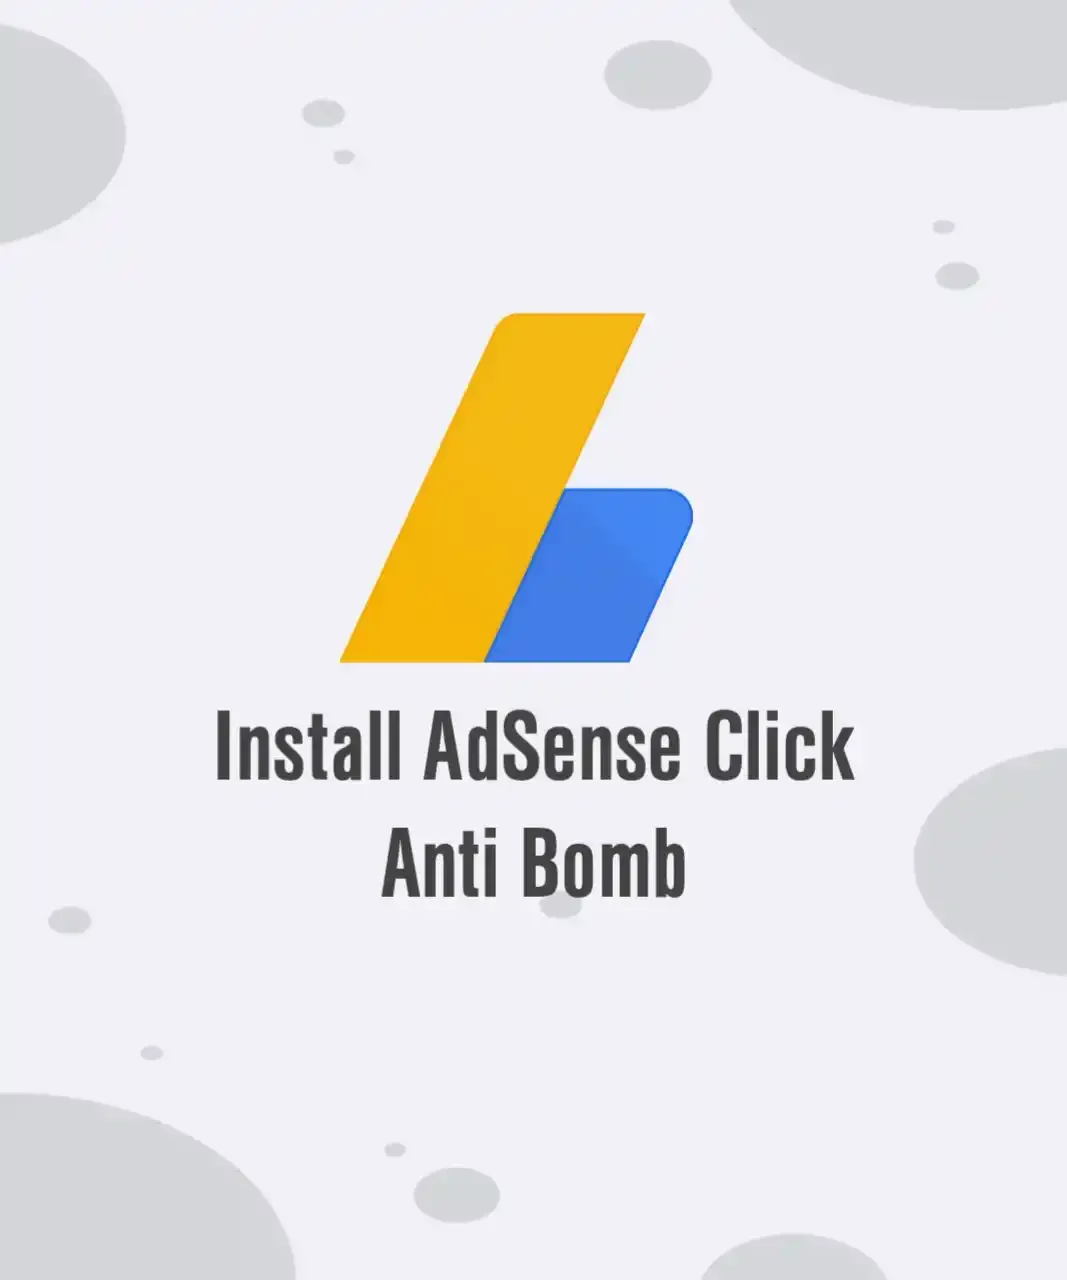 Adsense Click Anti Bomb